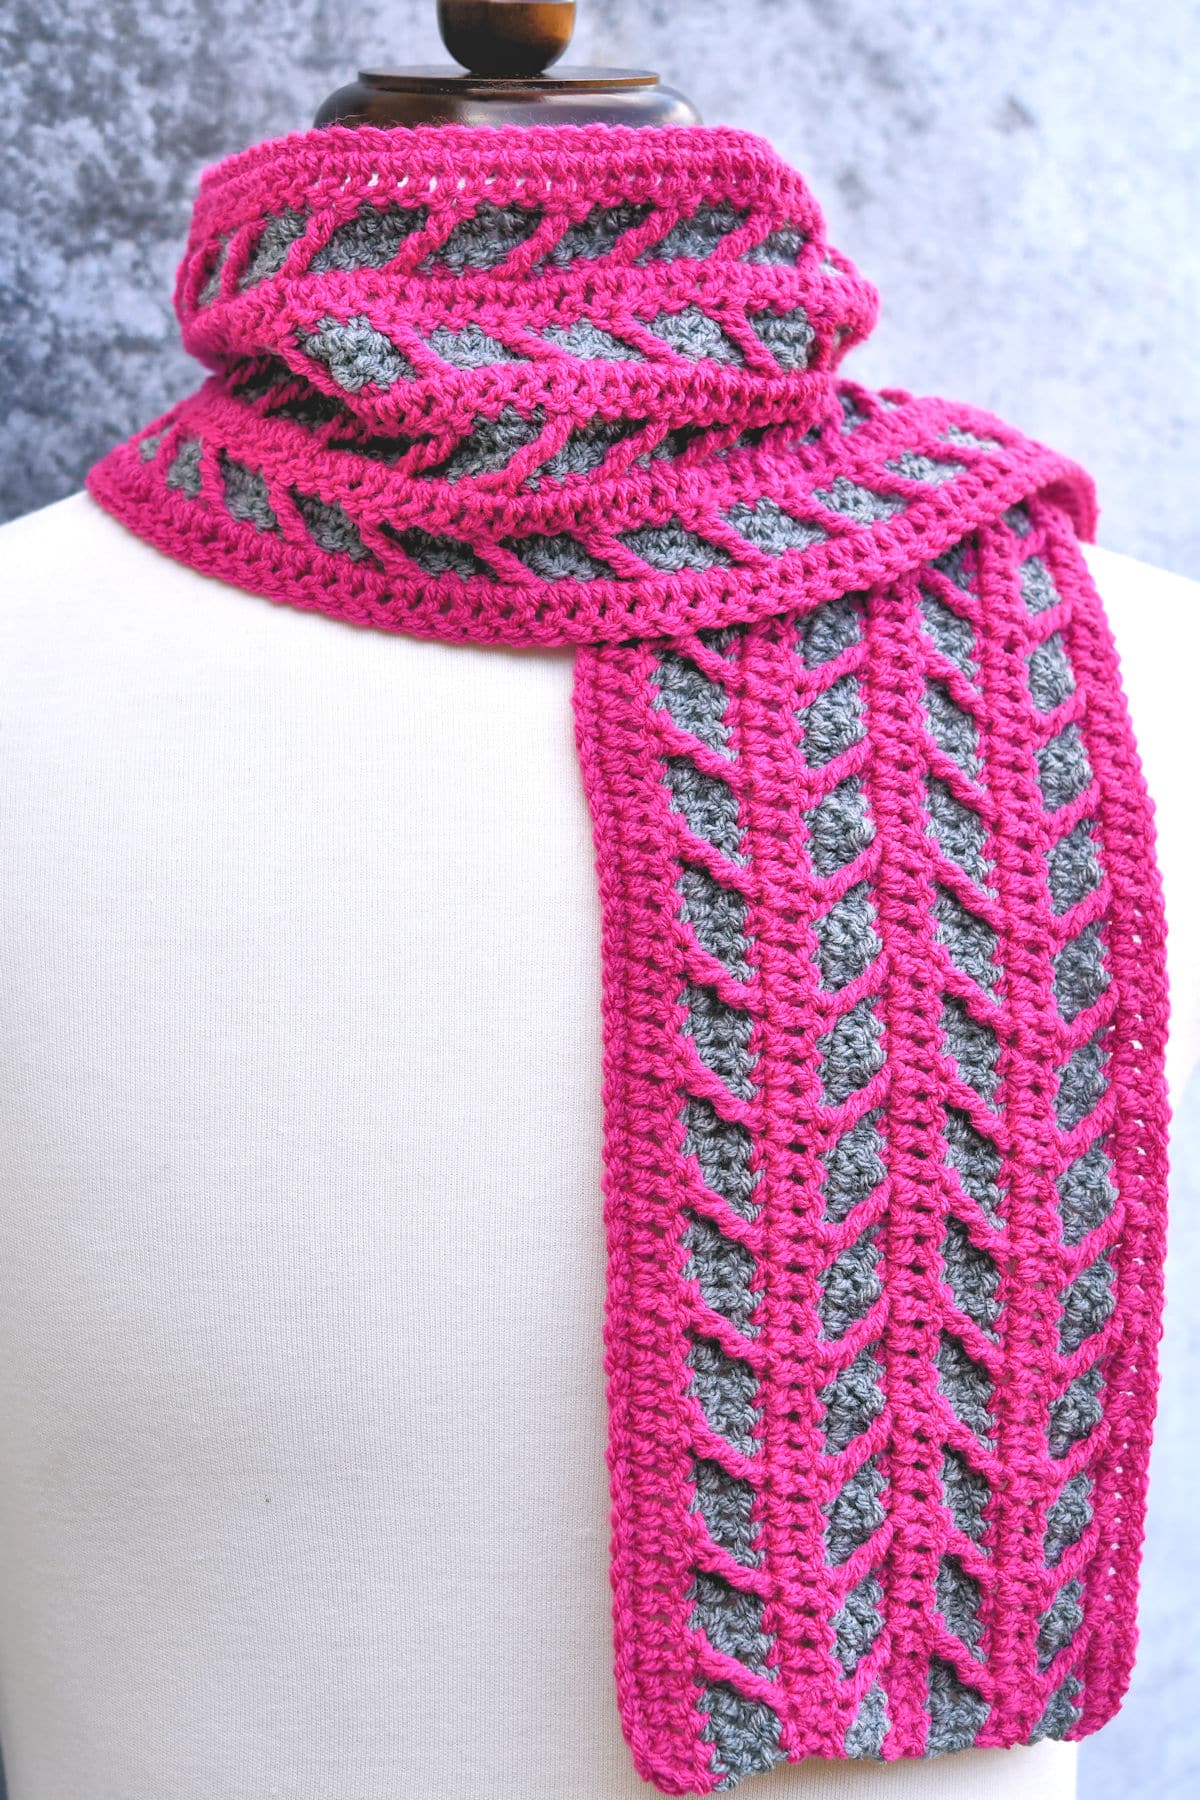 Two Color Free Crochet Scarf Pattern from Make It Crochet